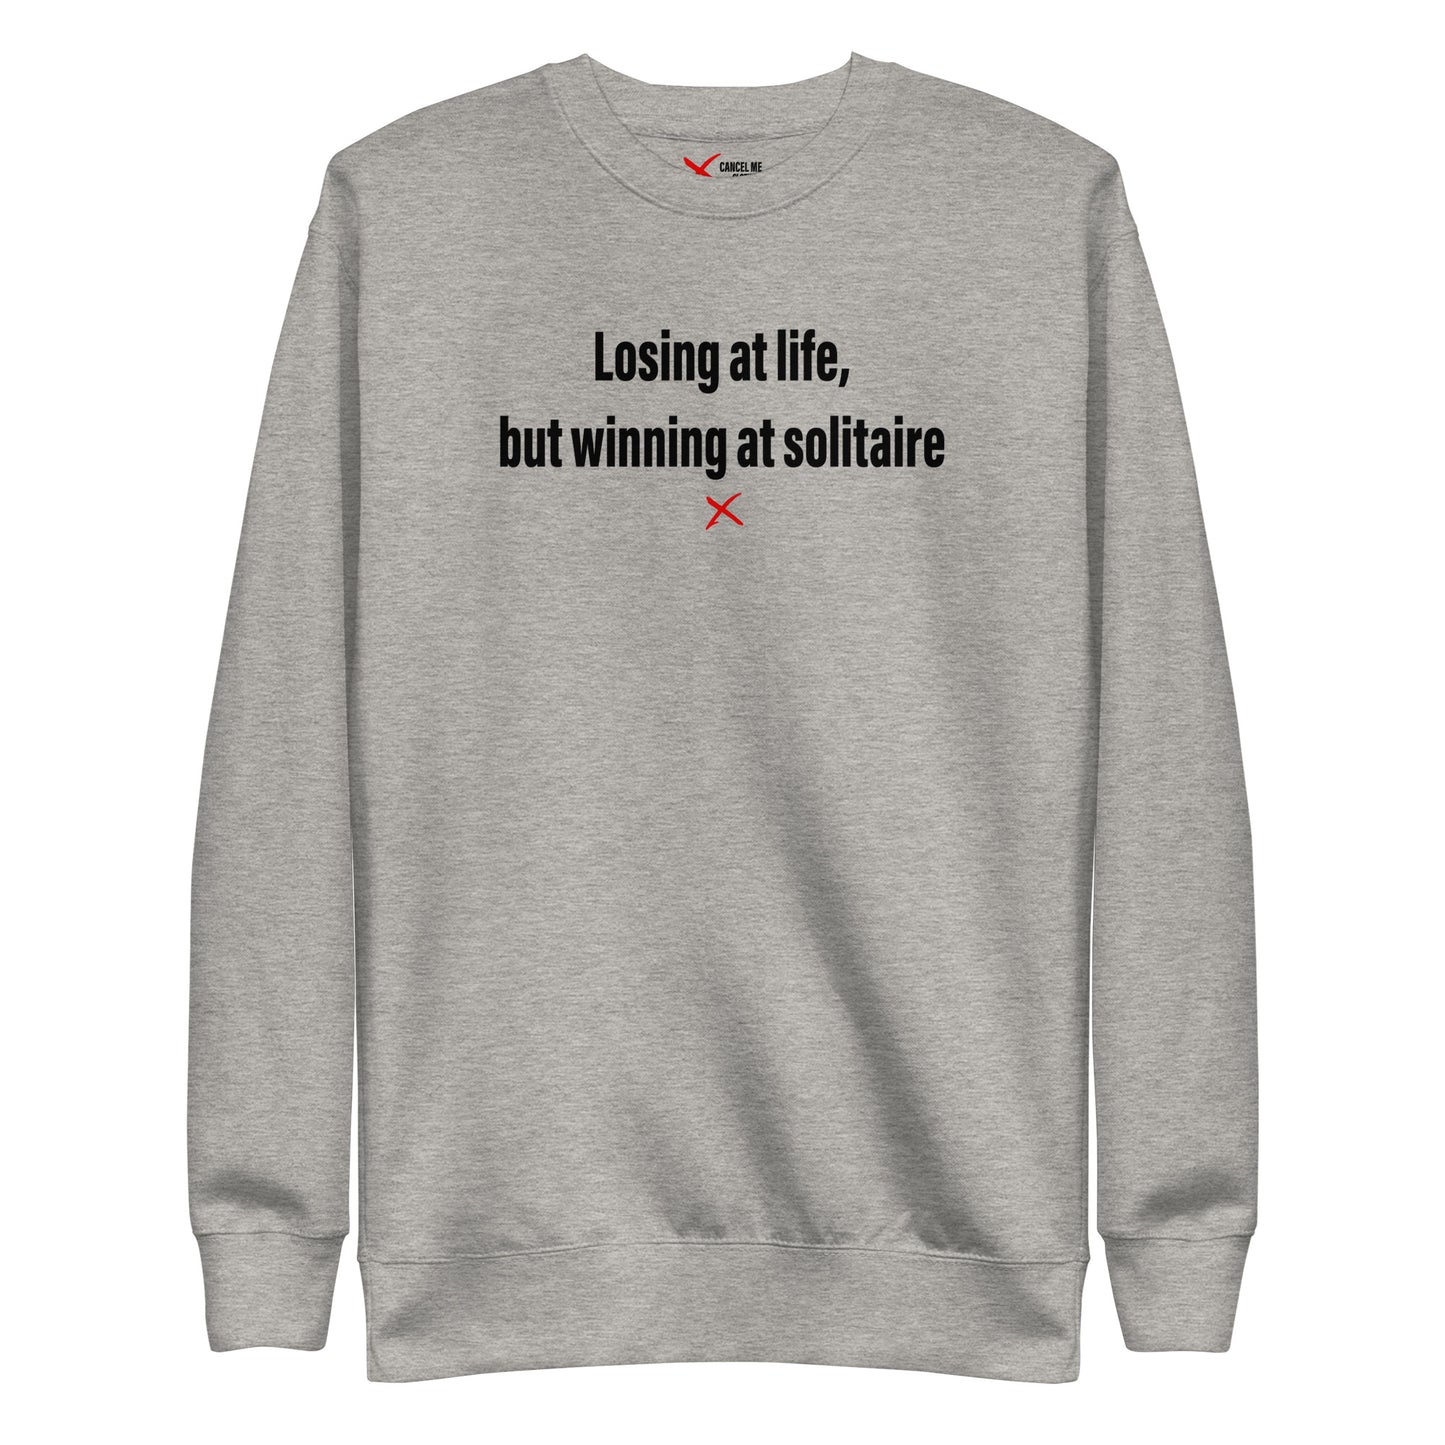 Losing at life, but winning at solitaire - Sweatshirt